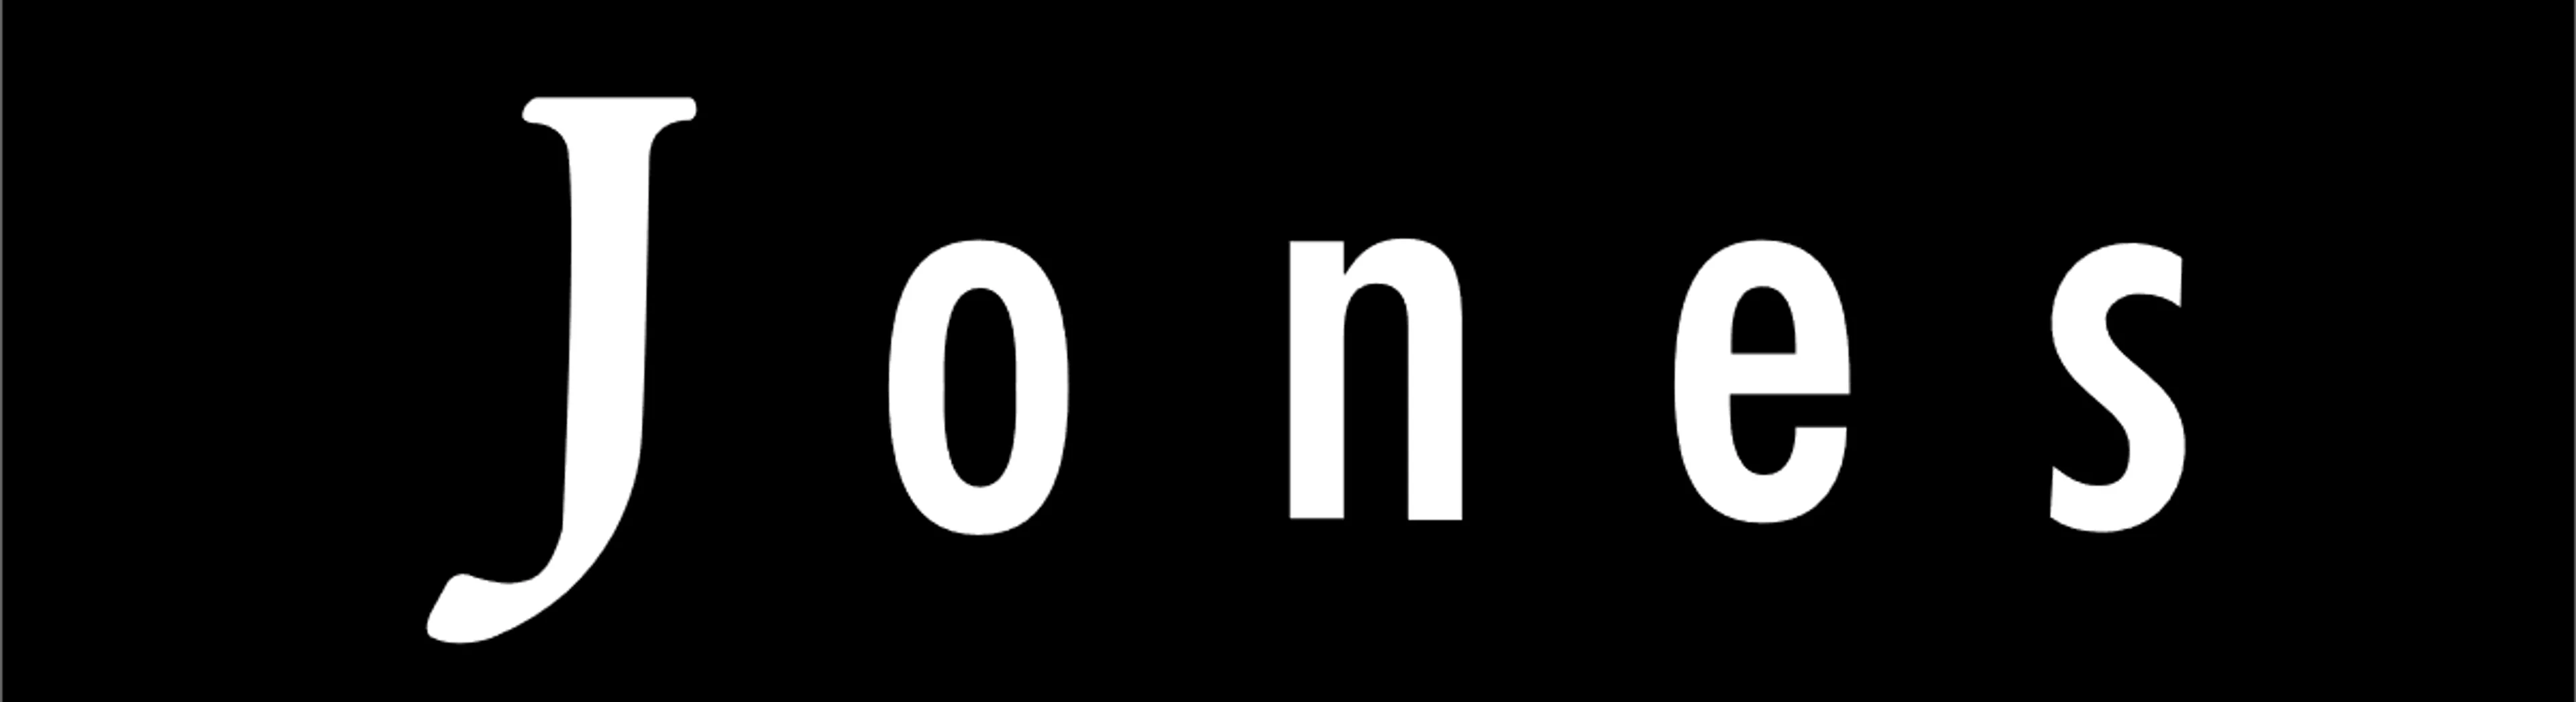 JONES logo